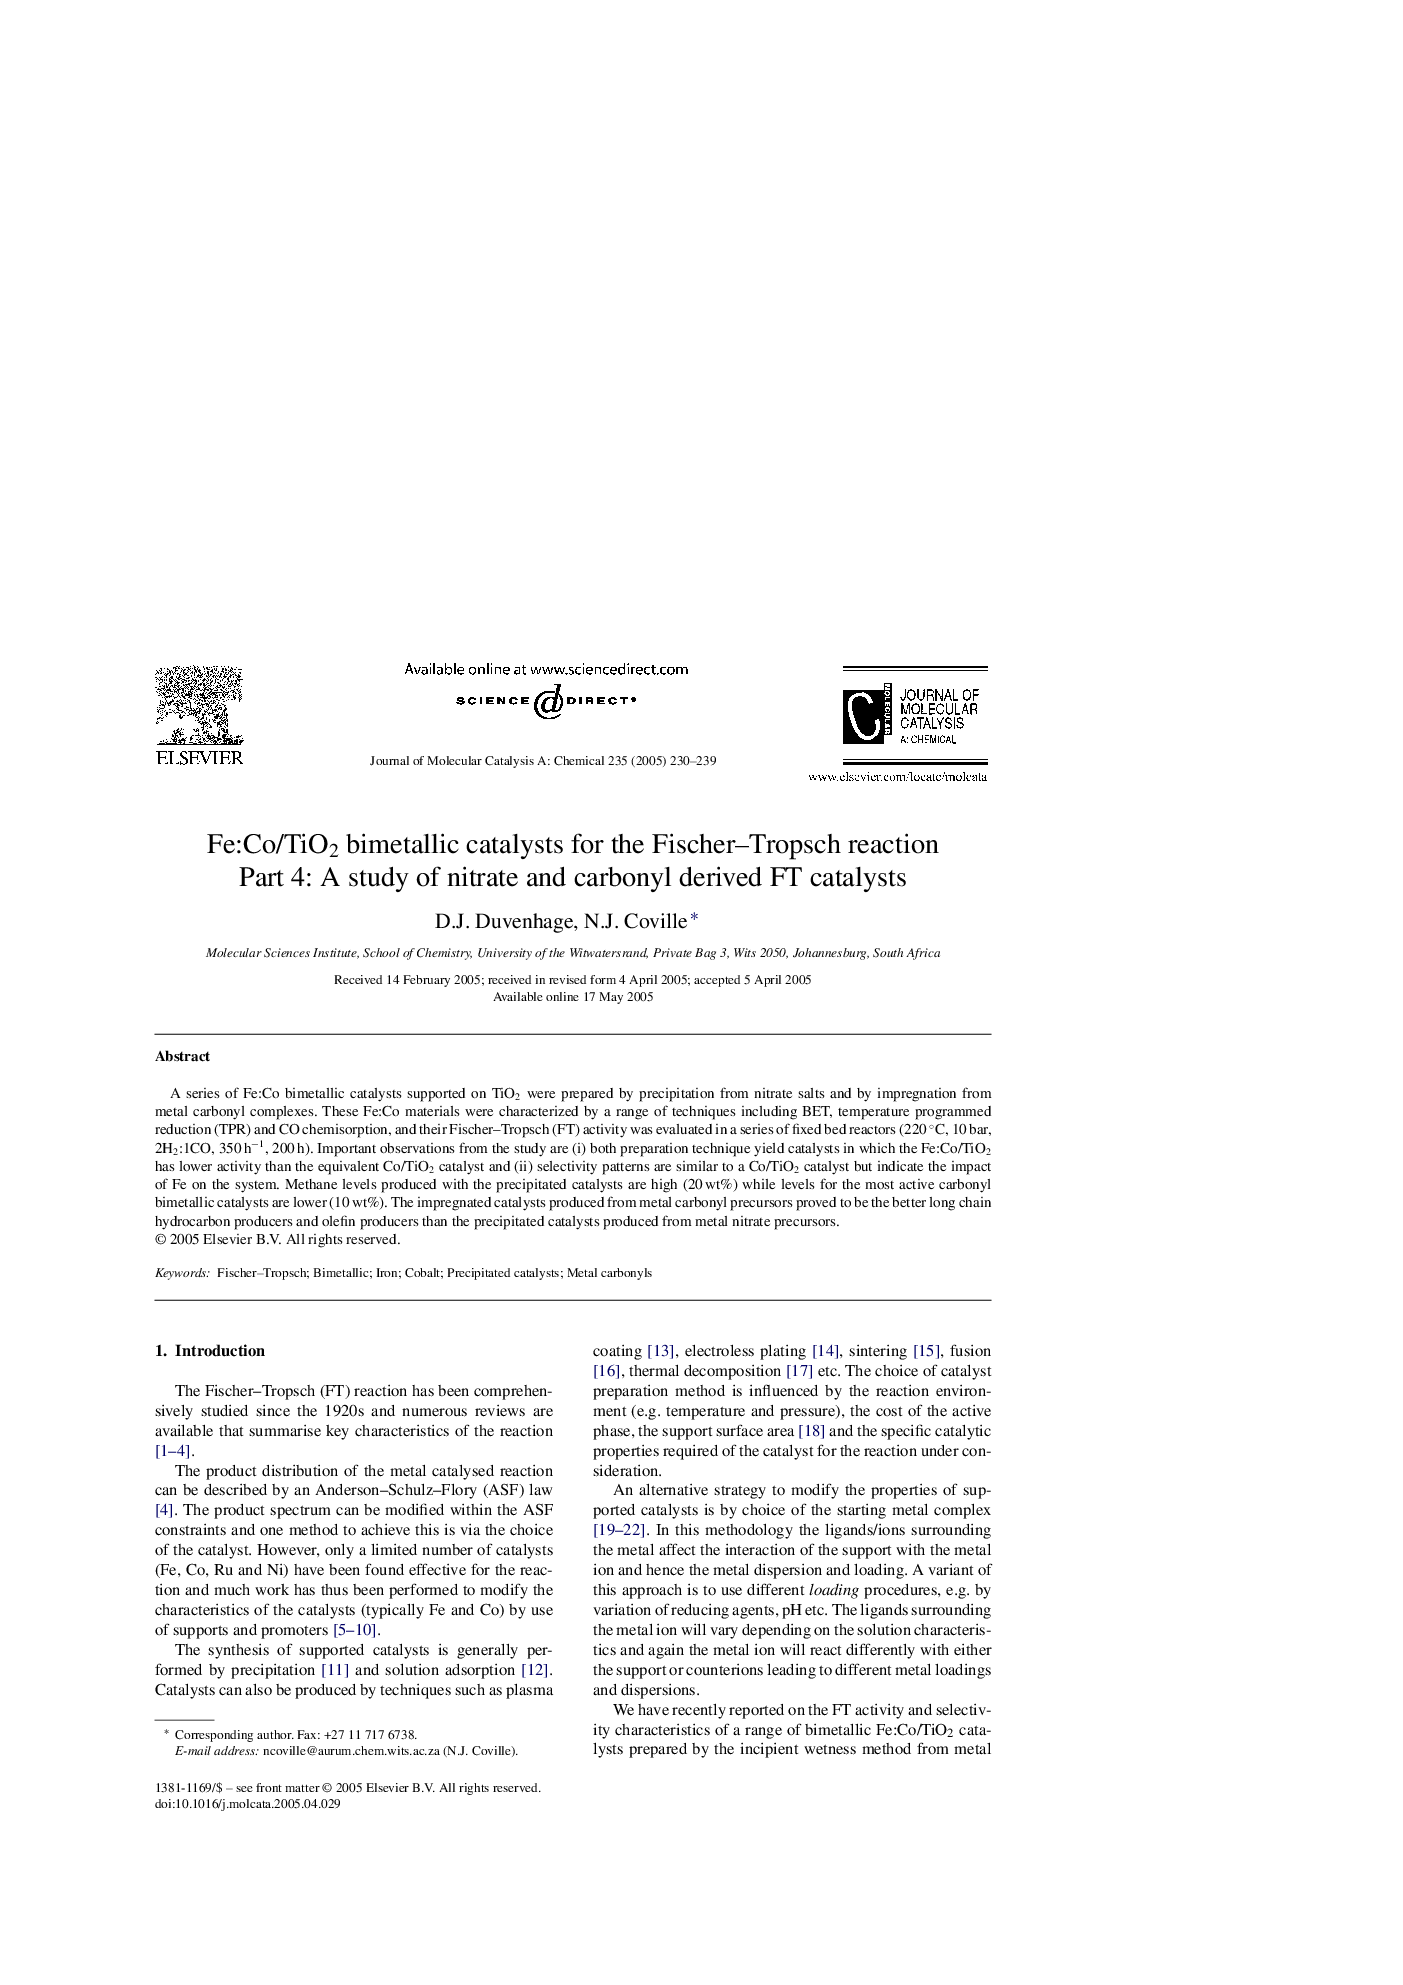 Fe:Co/TiO2 bimetallic catalysts for the Fischer-Tropsch reaction